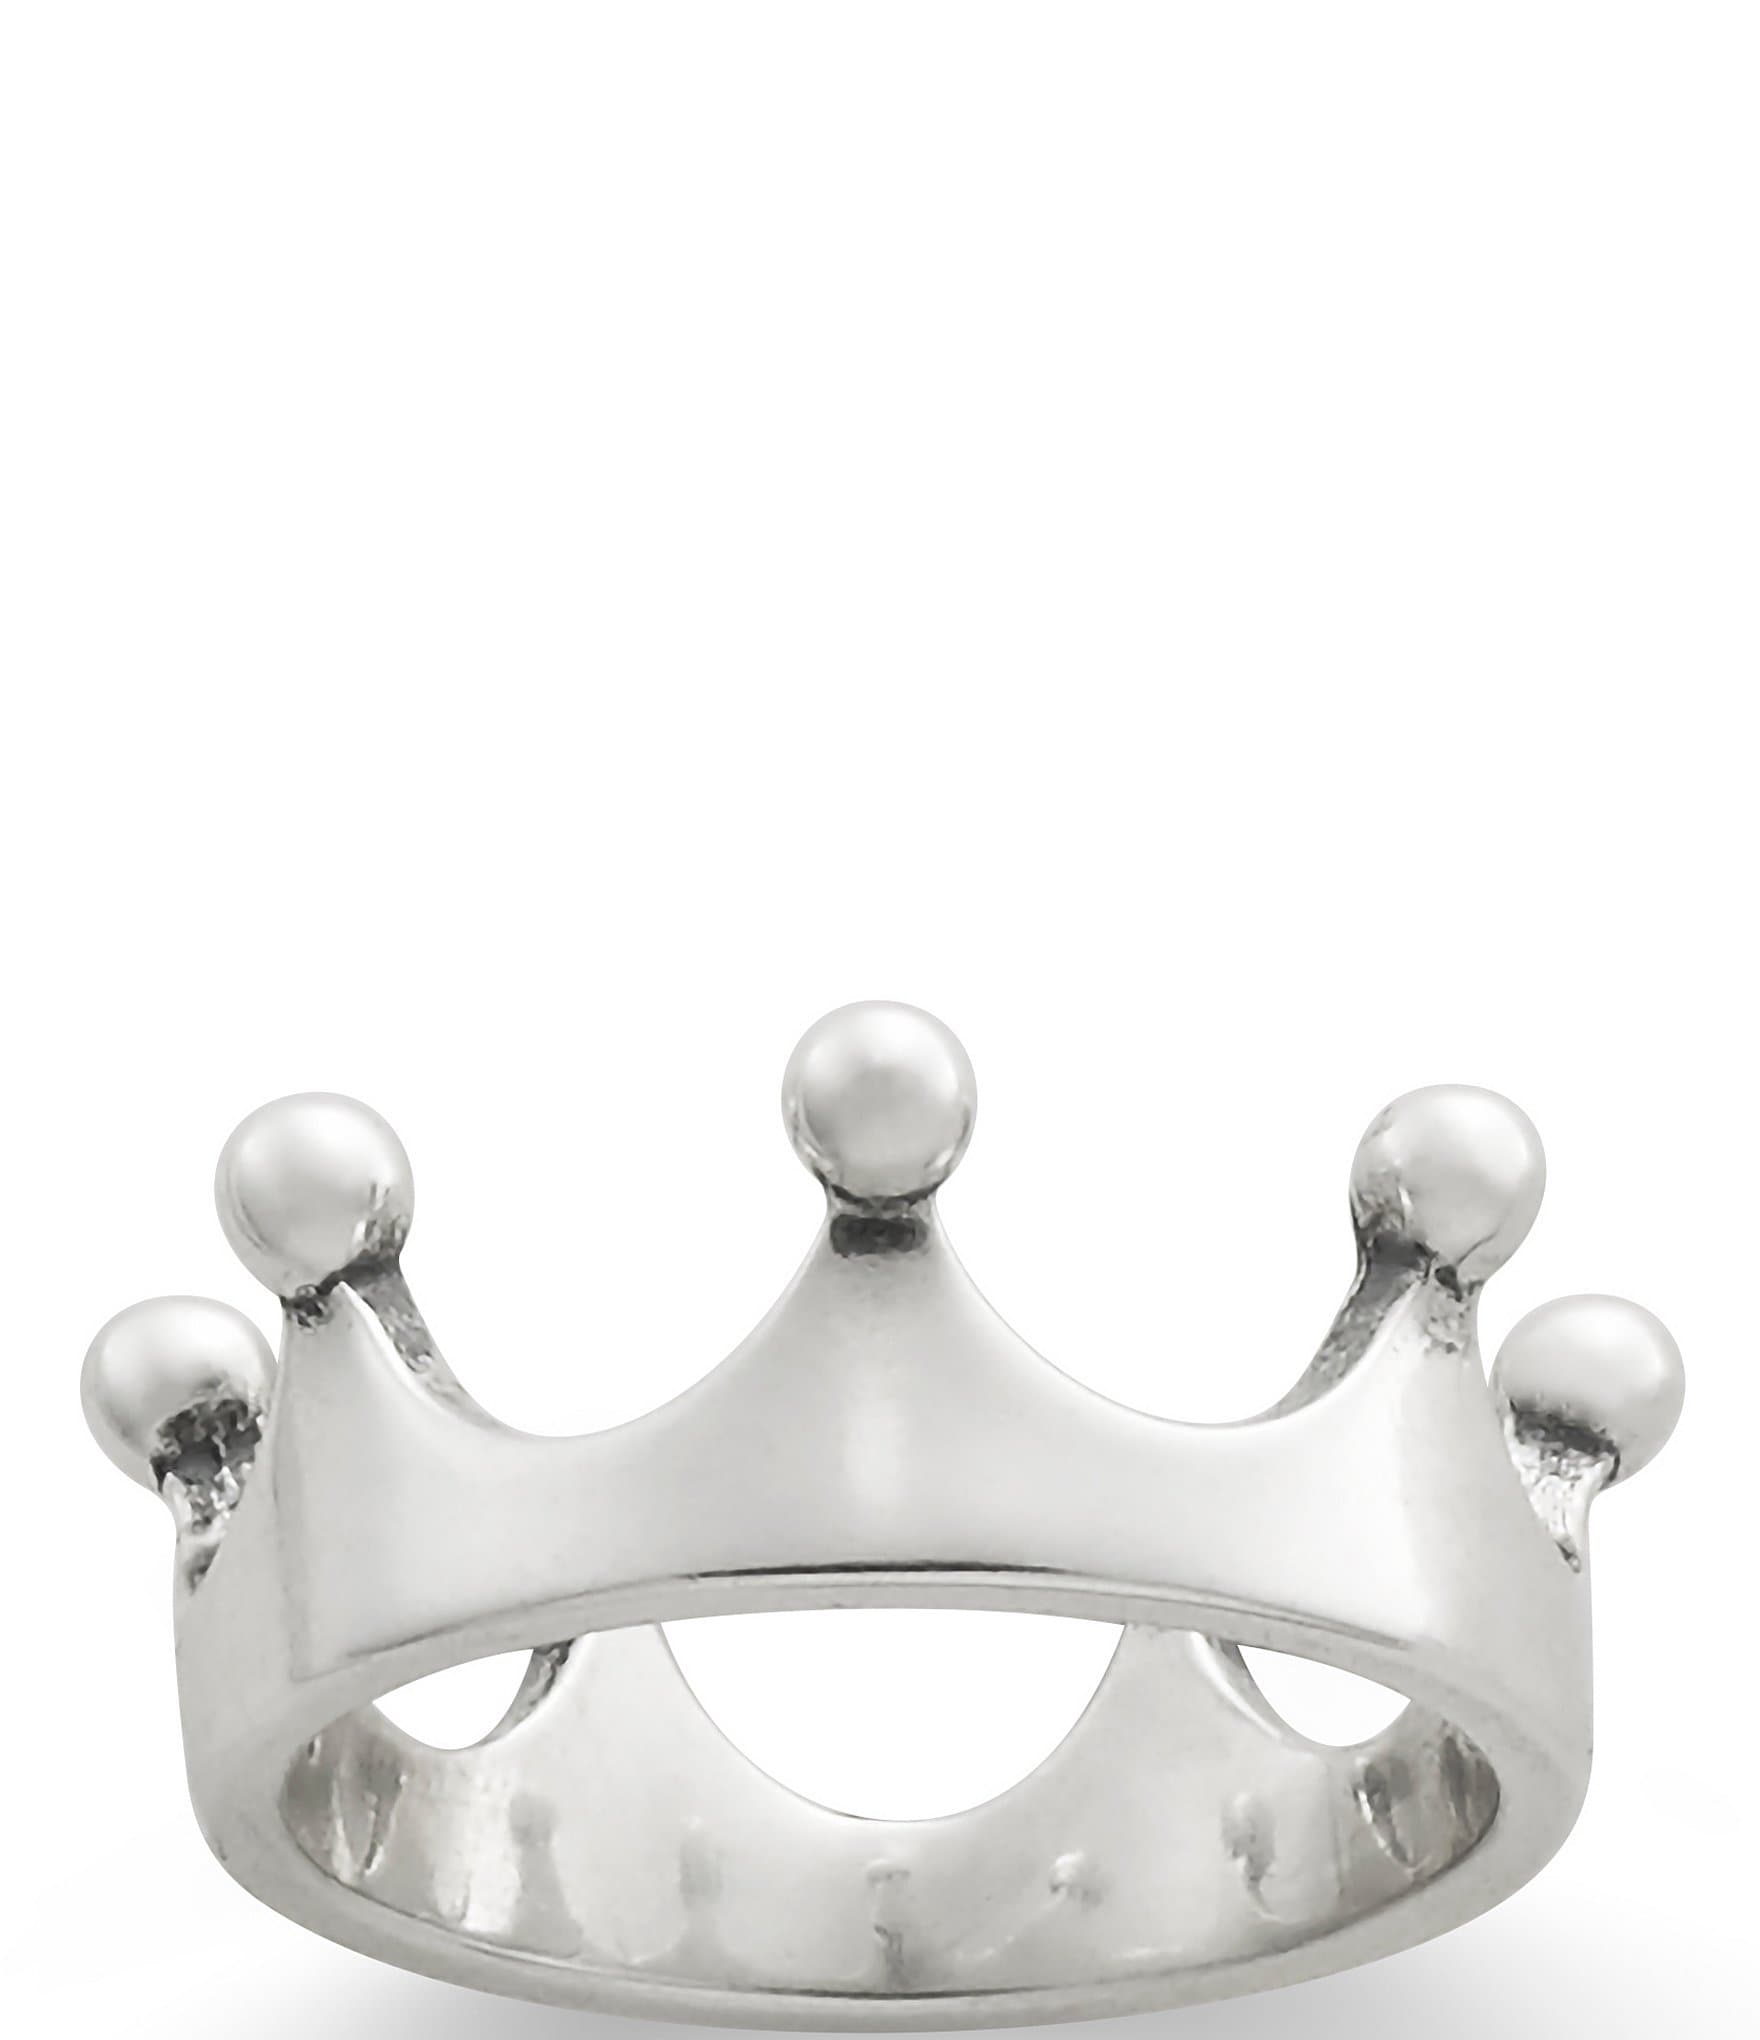 Buy 14k Gold Crown Rings Set. Princess Crown Ring. Online in India - Etsy